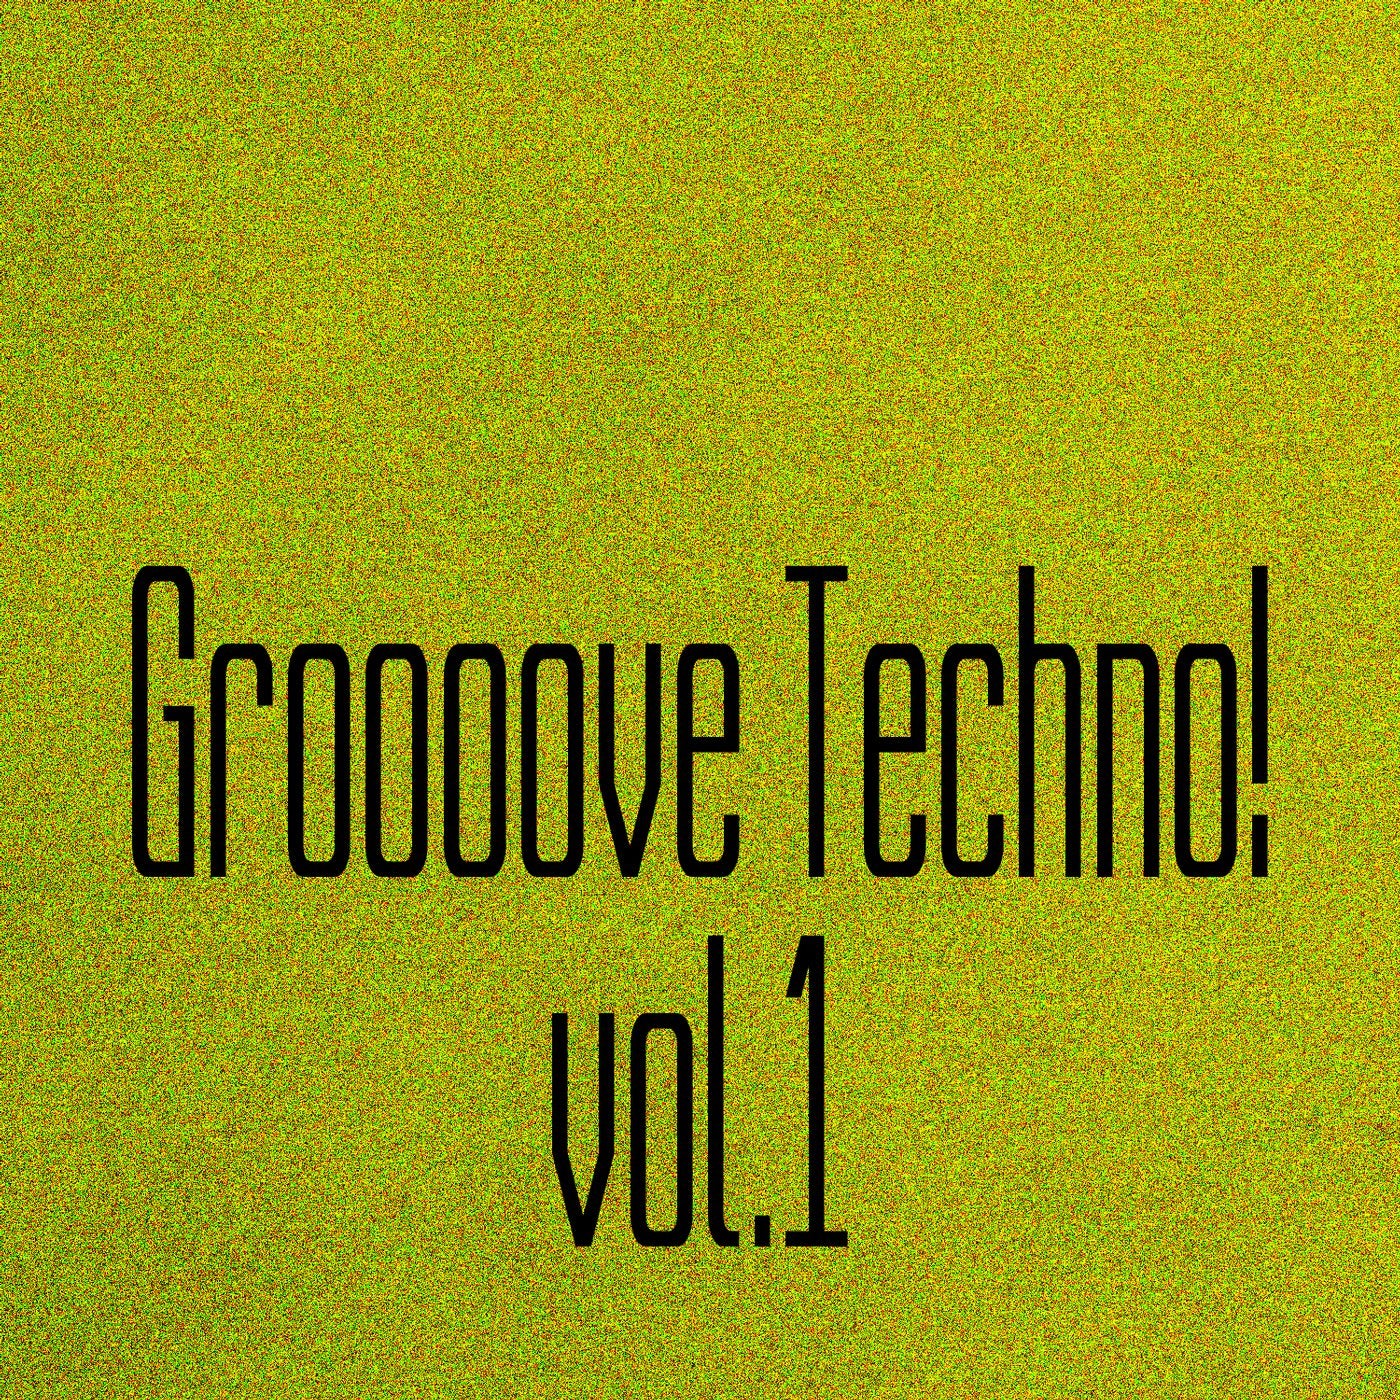 Groooove Techno! Vol. 1